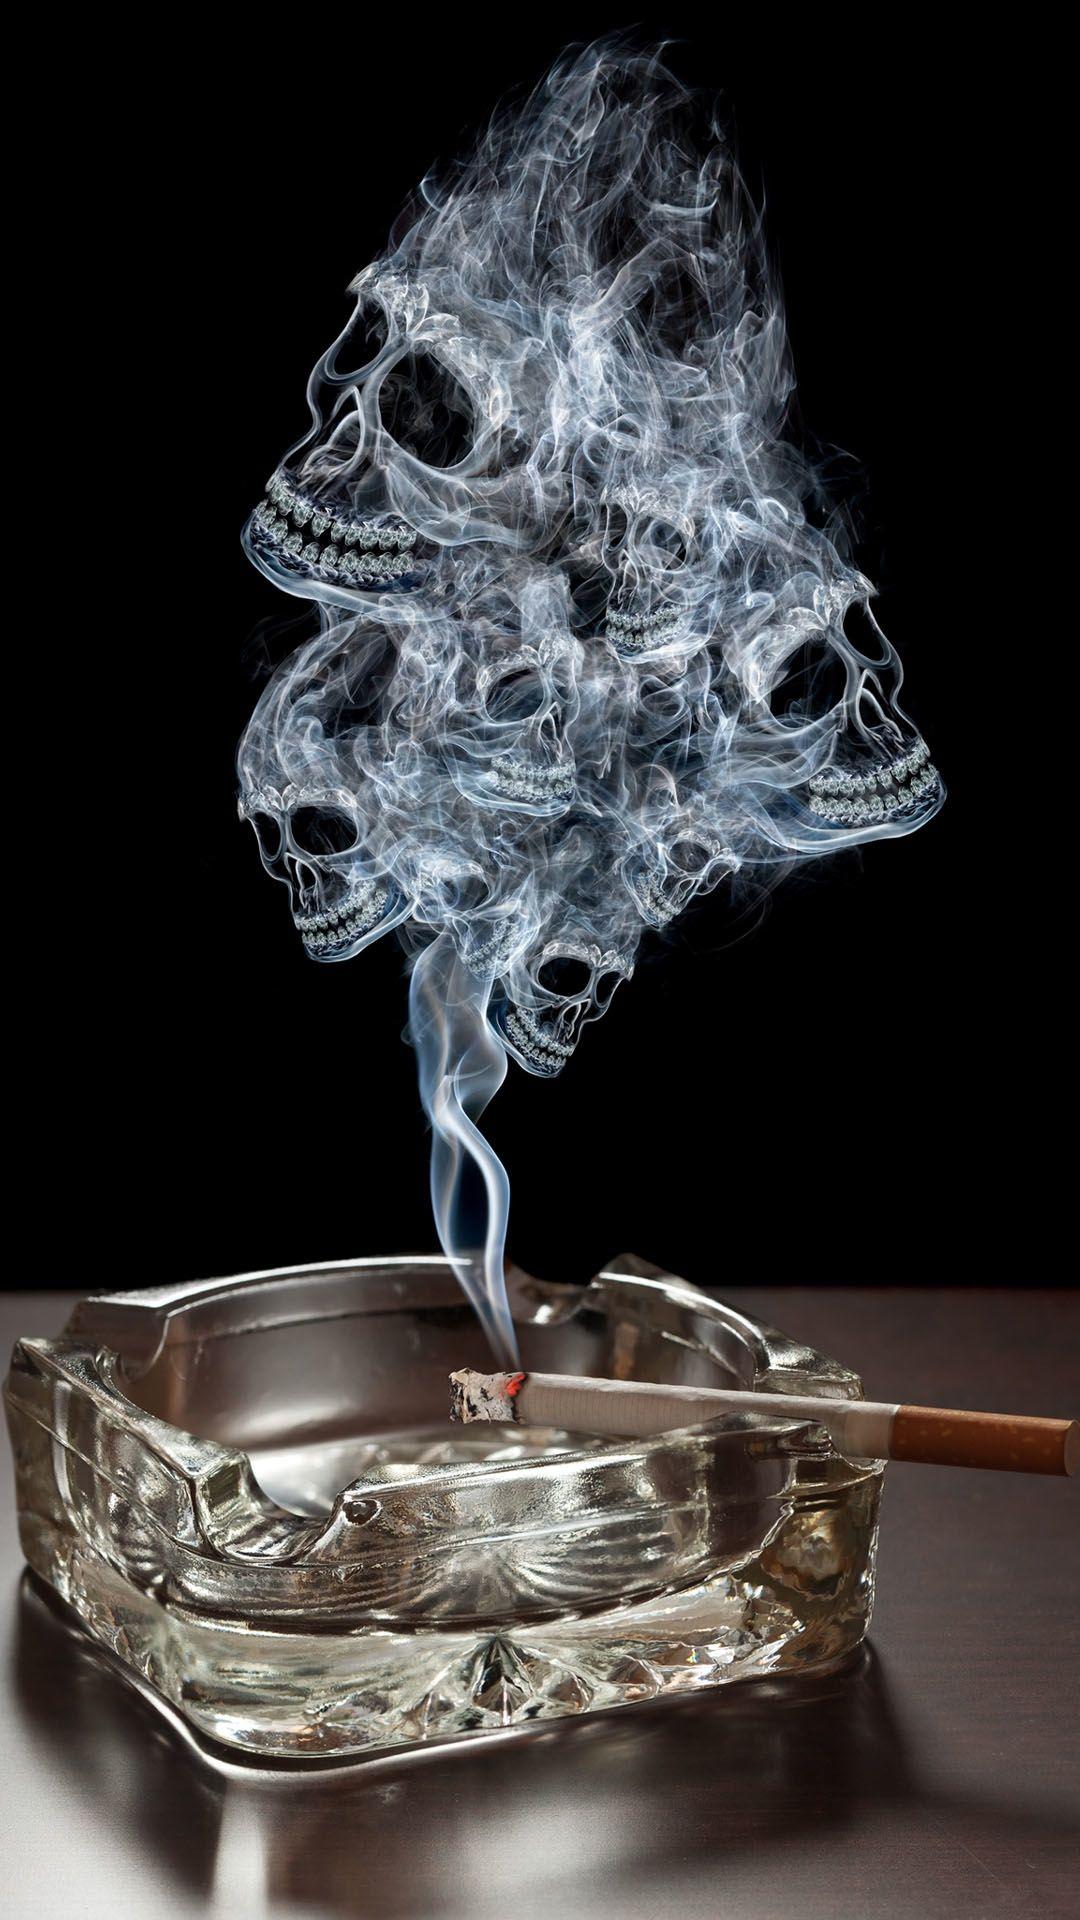 750 Smoking Pictures  Download Free Images on Unsplash